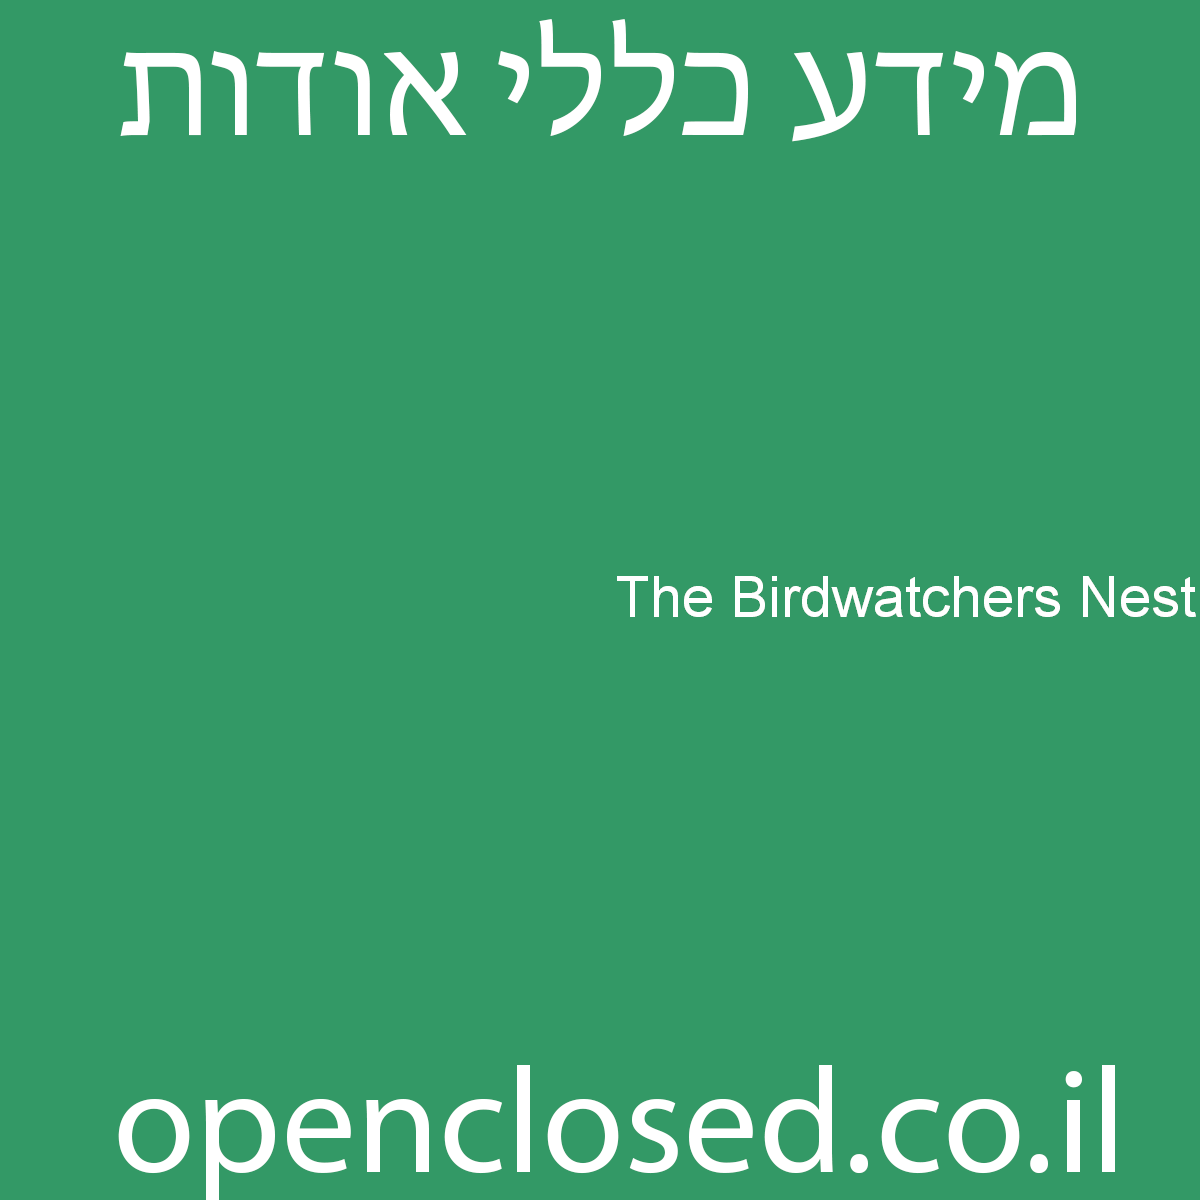 The Birdwatchers Nest